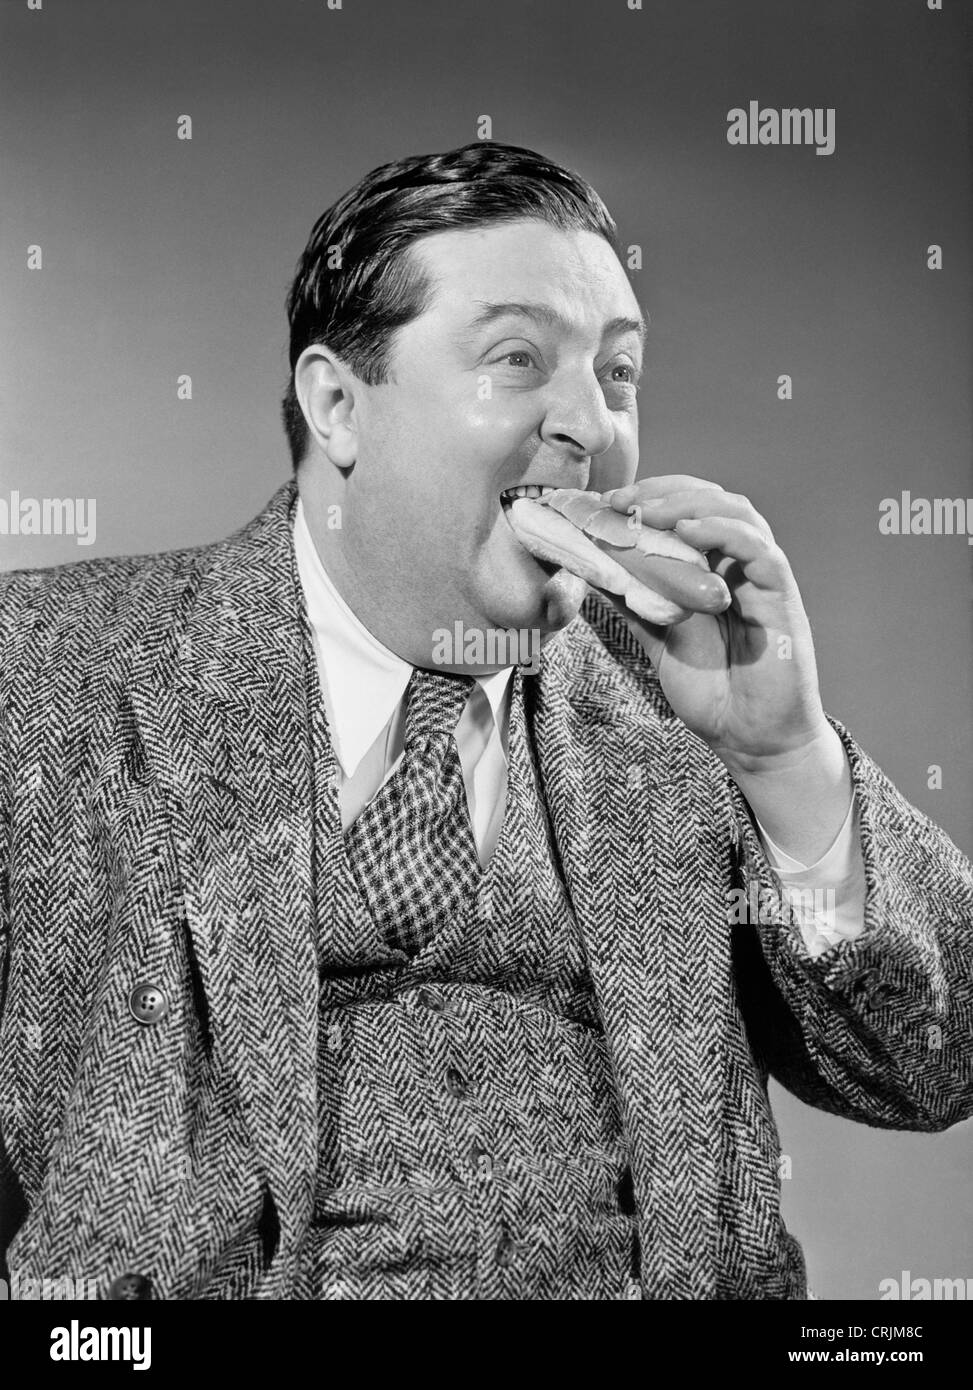 Man eating hotdog Stock Photo